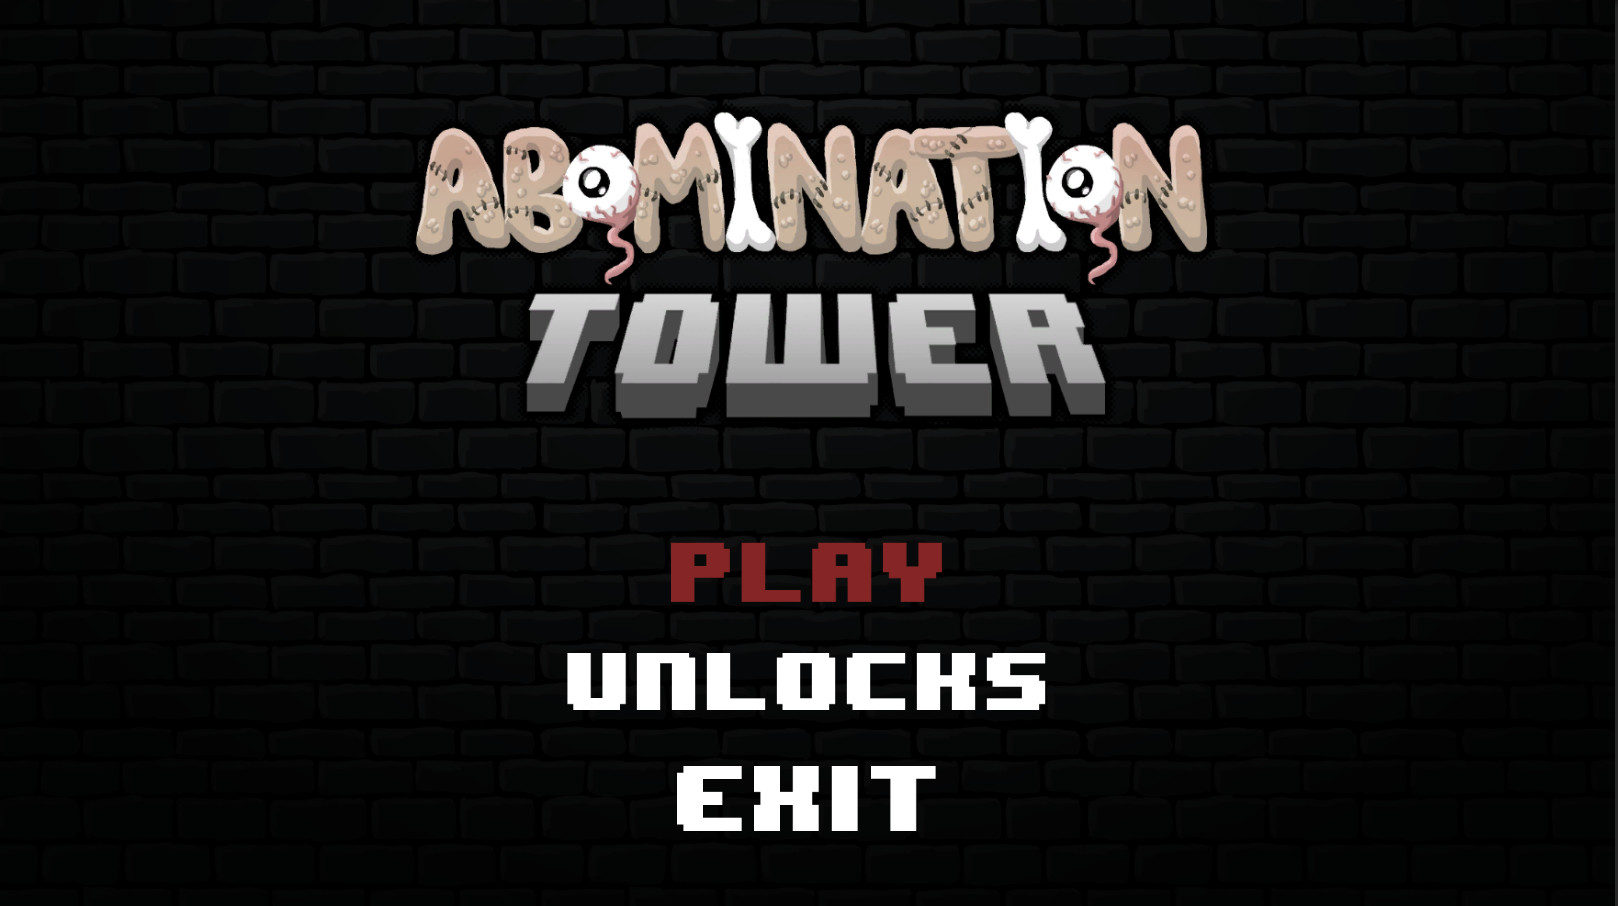 Abomination Tower screenshot